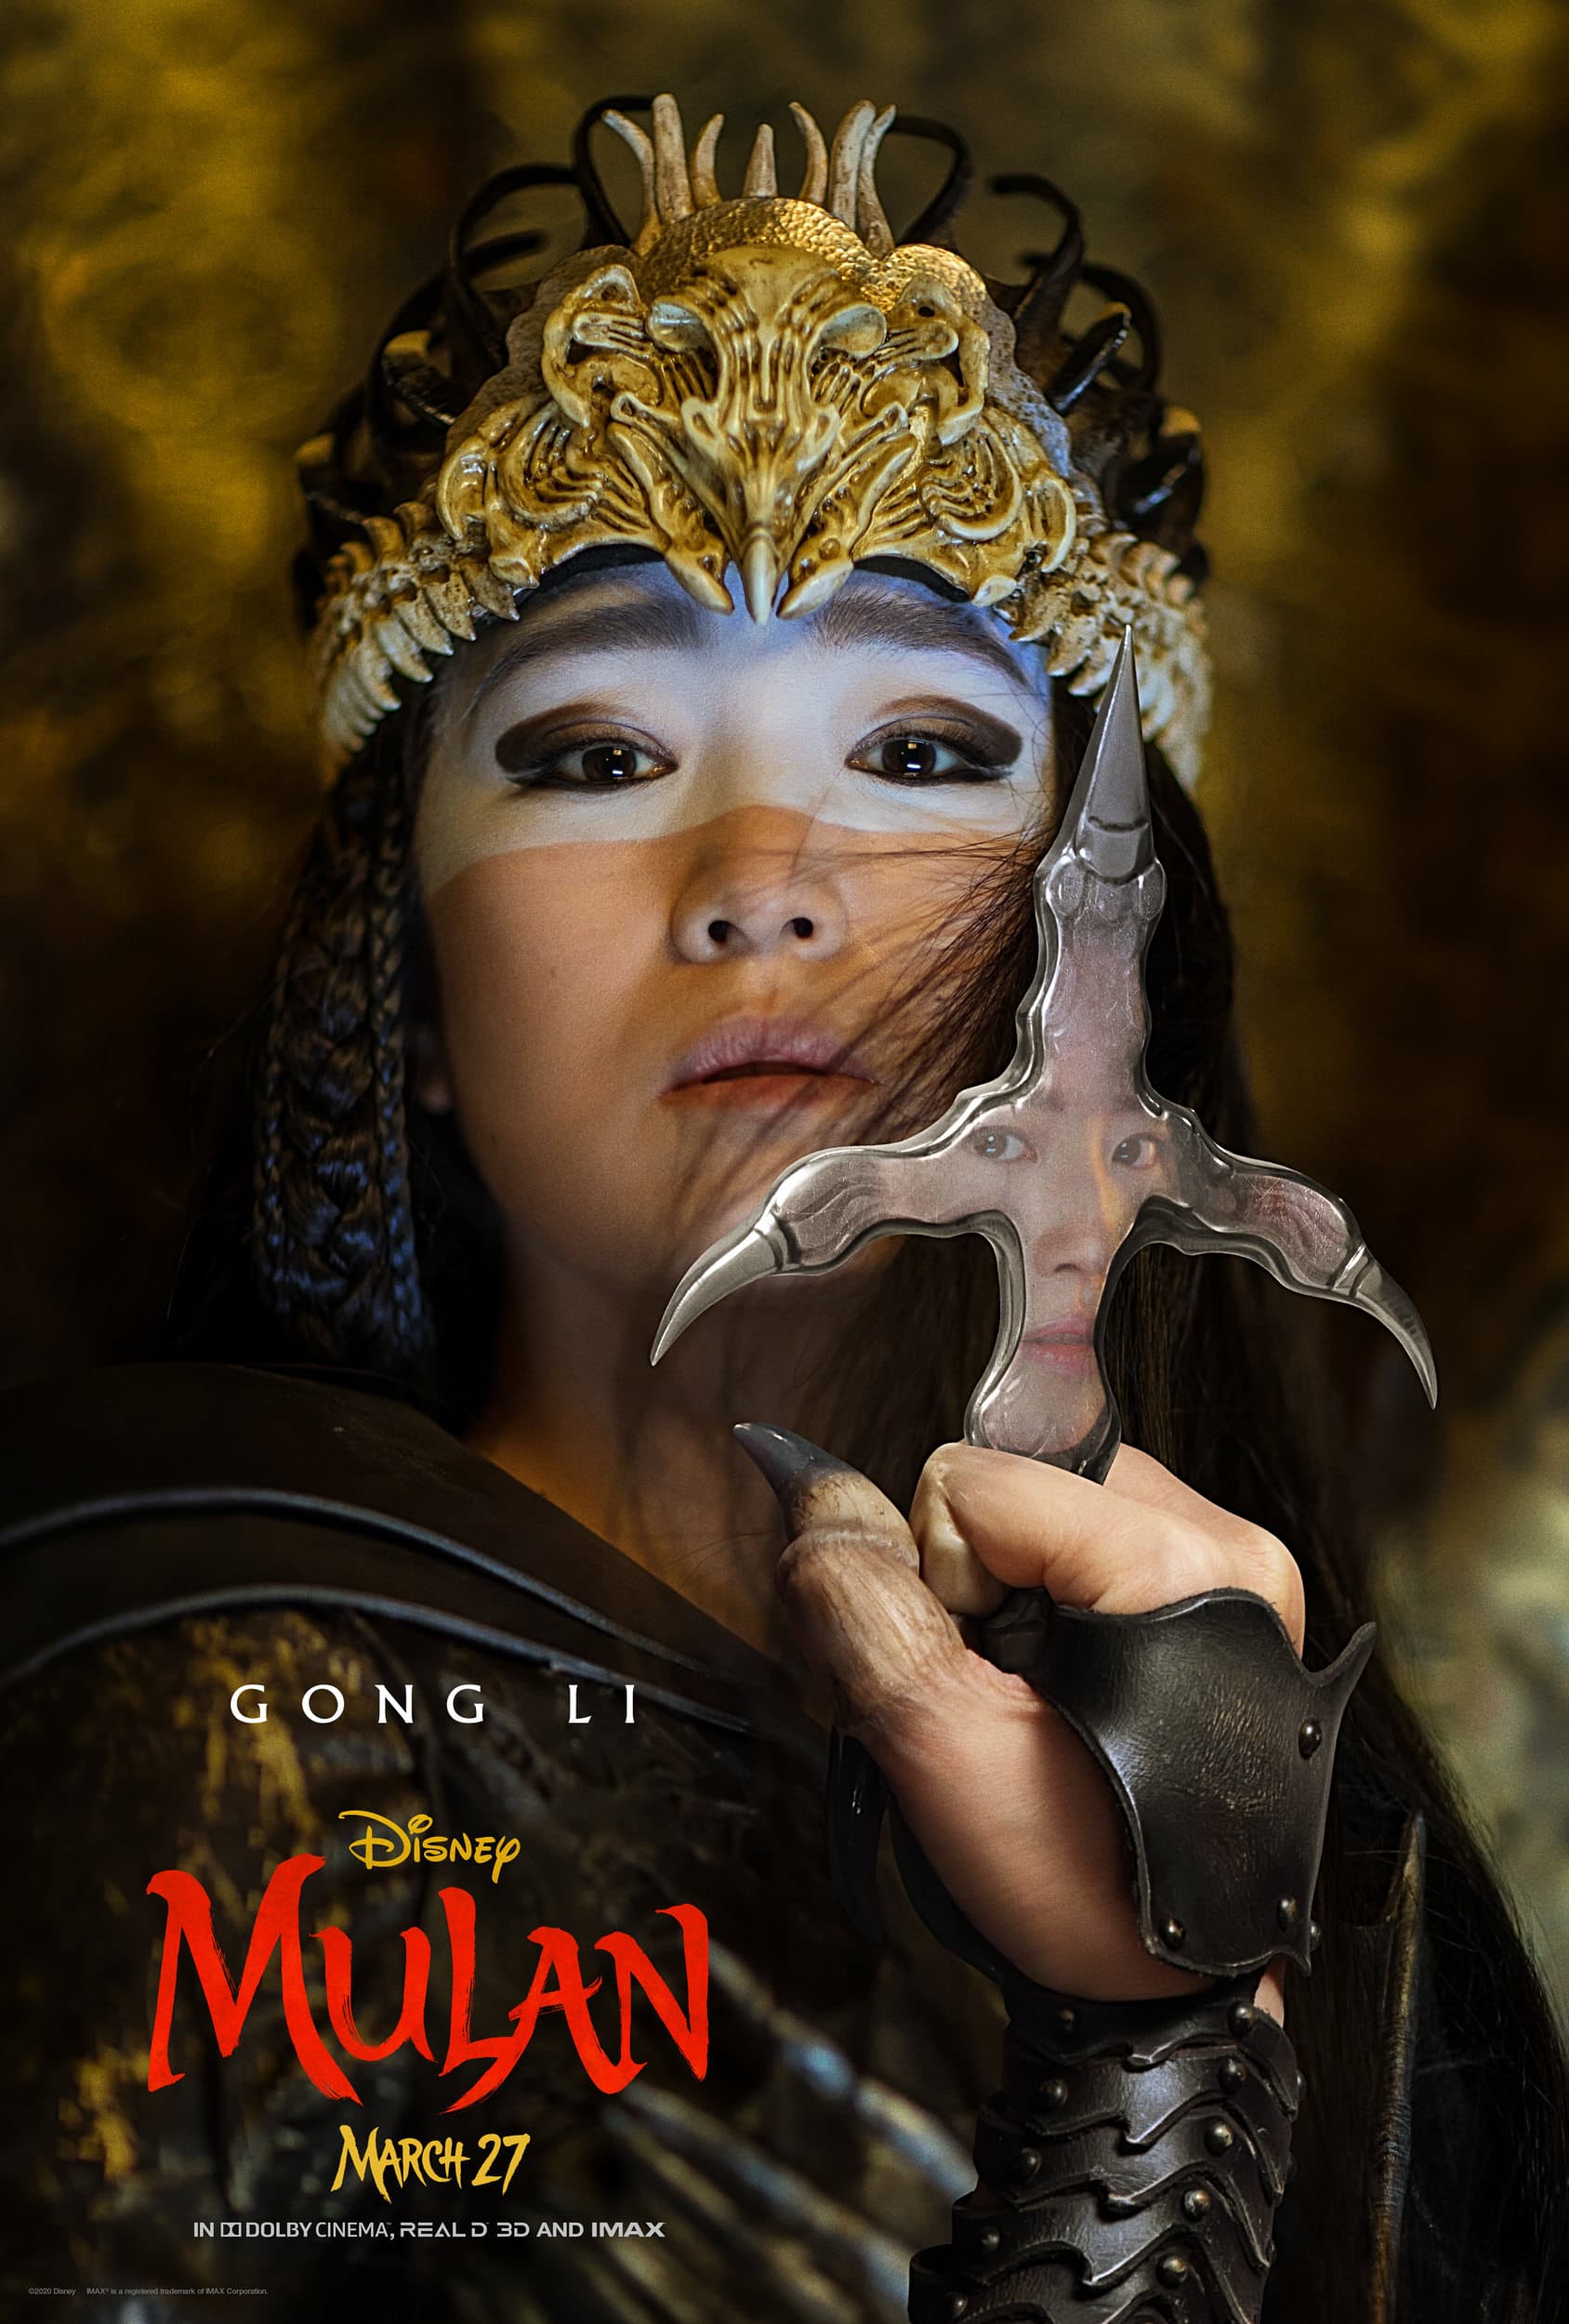 Gong Li as Xianniang in Mulan - Poster provided by Disney